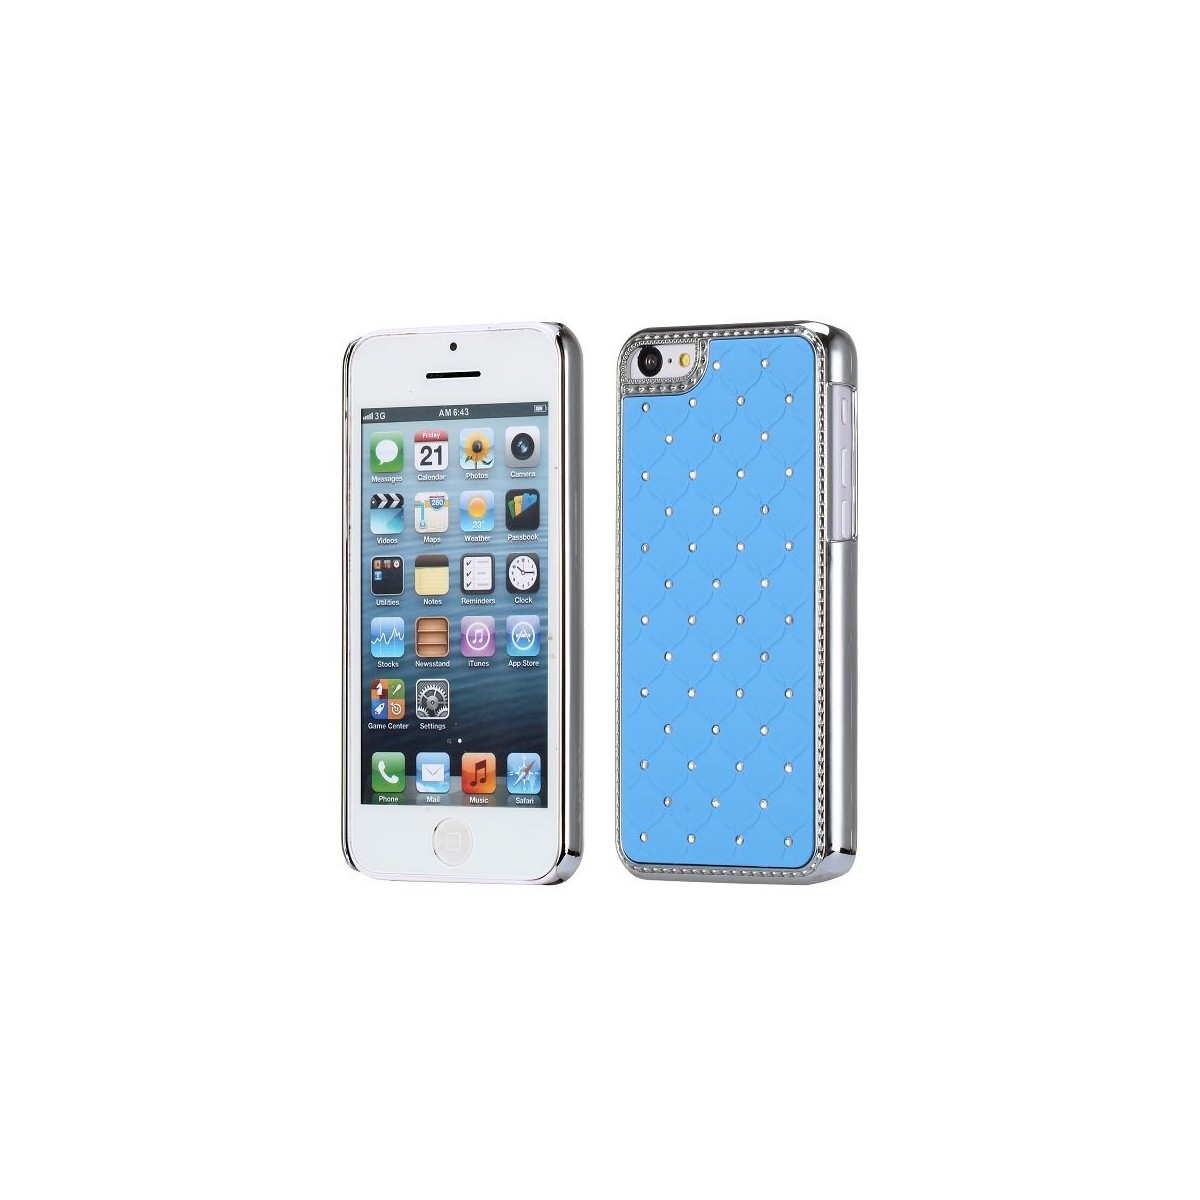 Crazy Kase - Coque iPhone 5C avec strass sur fond Bleu